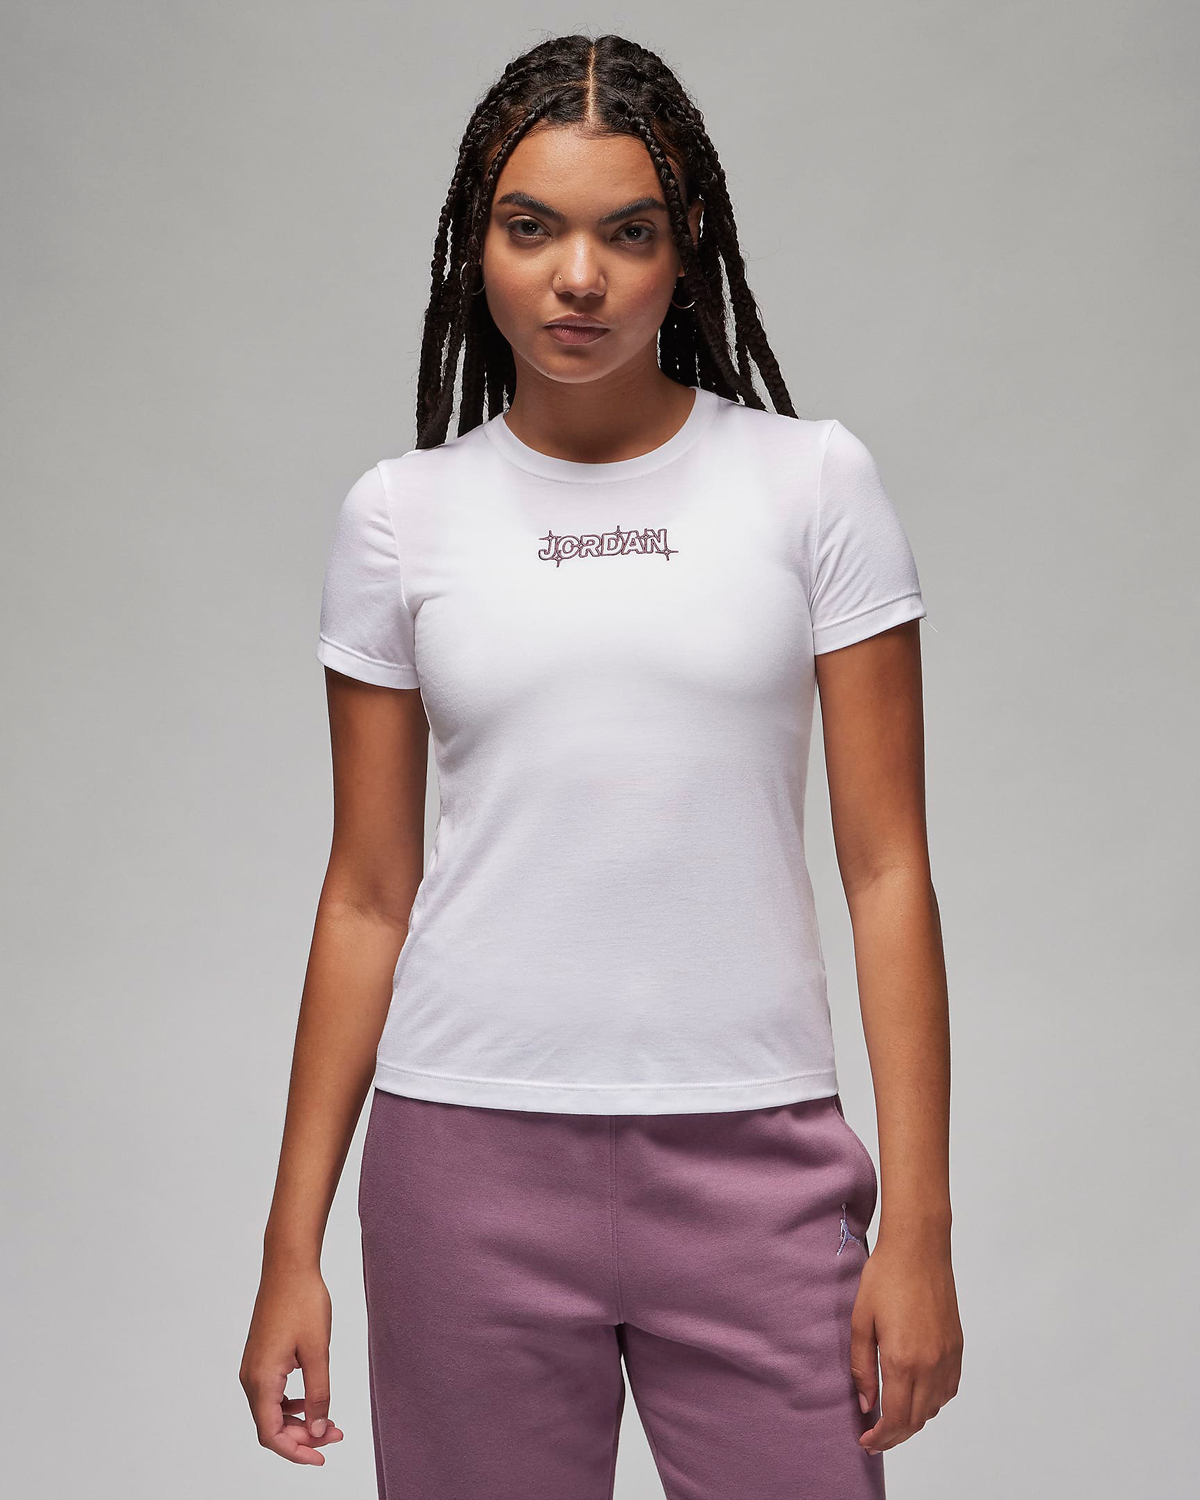 Jordan-Womens-Slim-Graphic-T-Shirt-White-Sky-J-Mauve-1